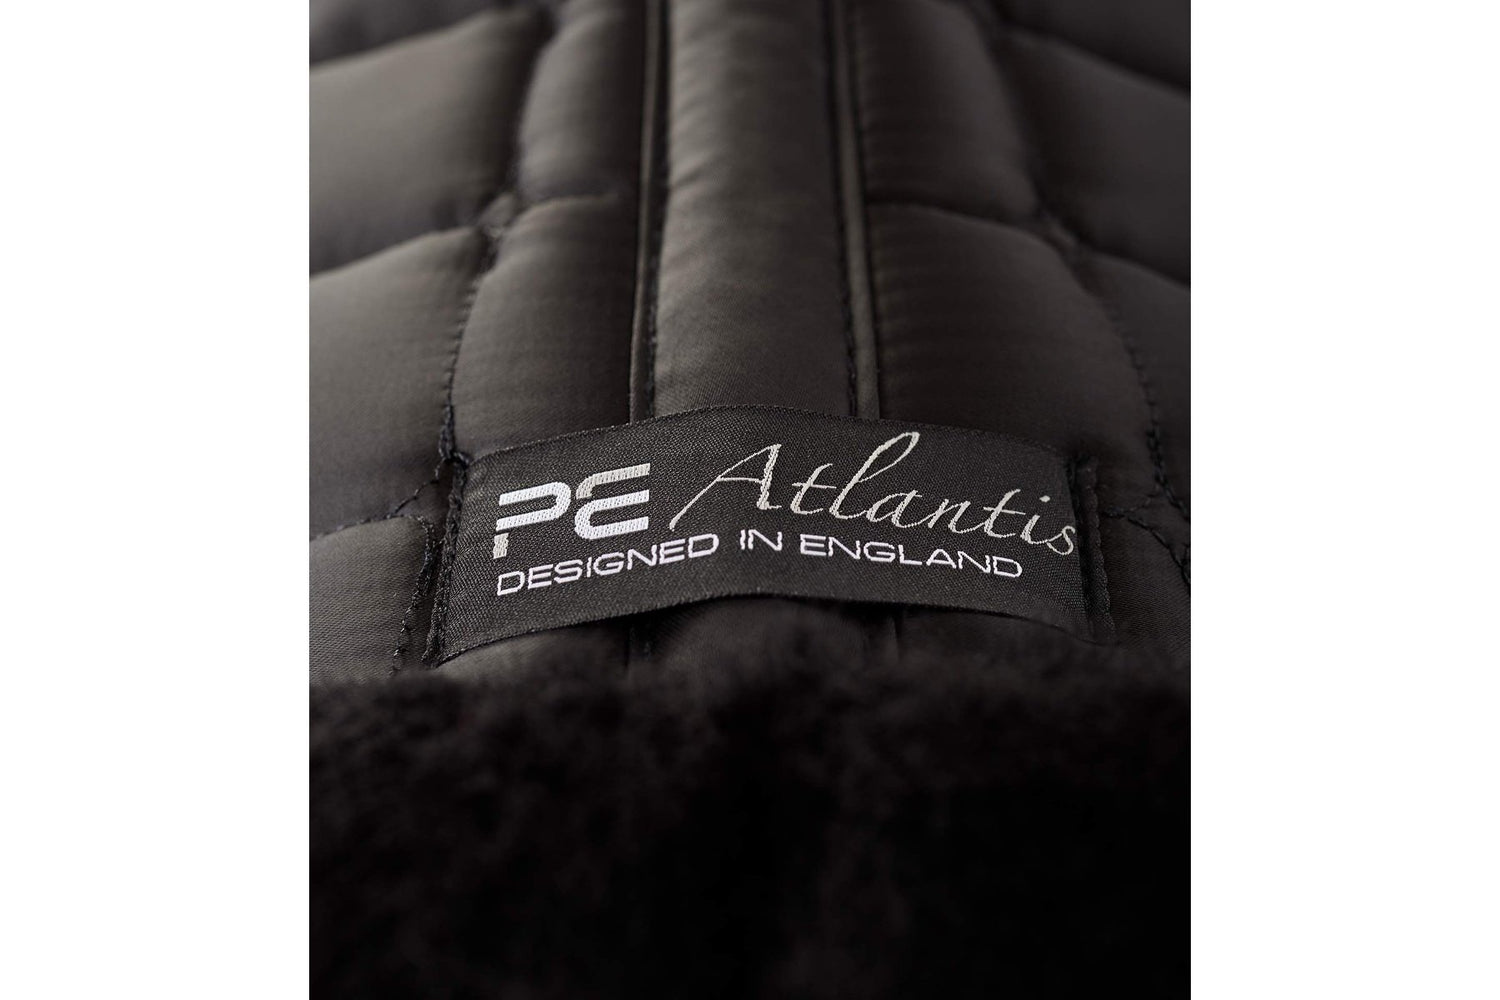 PE Atlantis CC Satin Wool GP/Jump Square